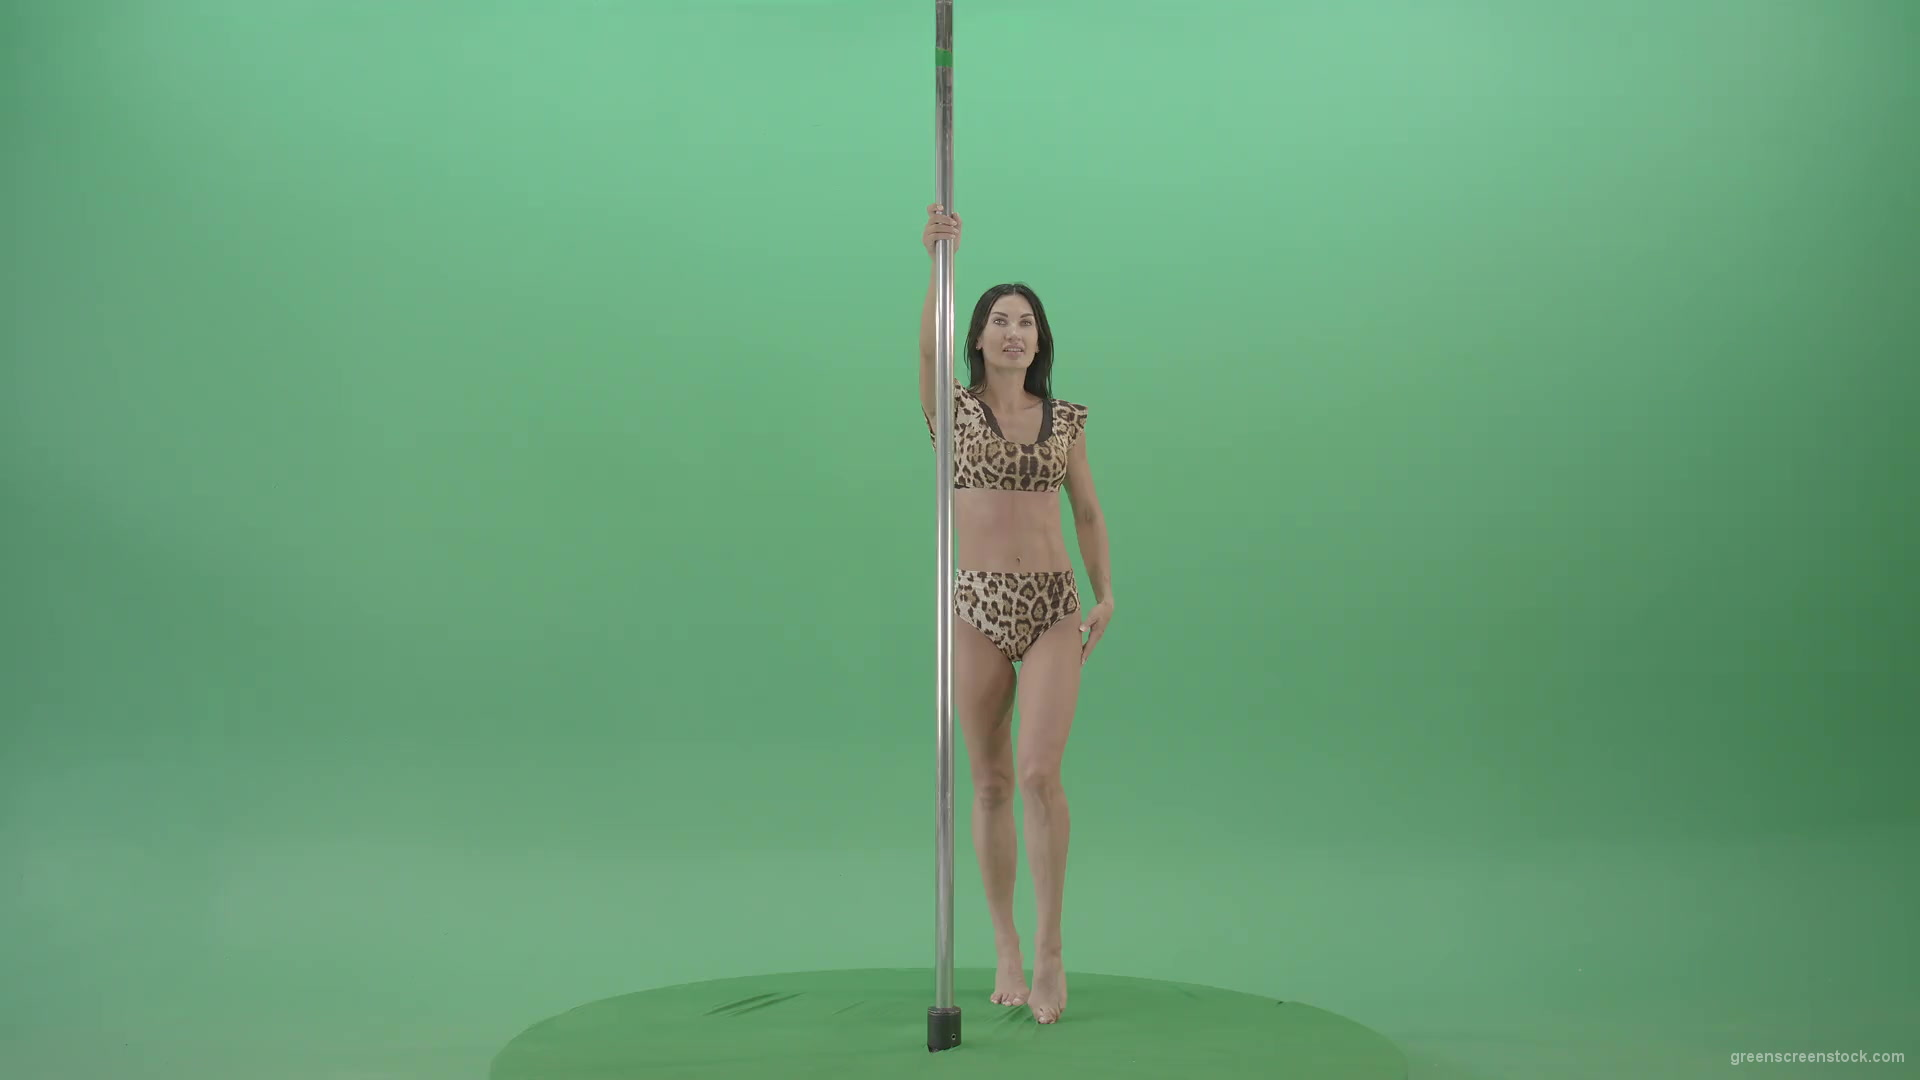 Athletic-sexy-female-model-spinning-on-pilon-in-jaguar-skin-underwear-dancing-pole-dance-on-Green-Screen-4K-Video-Footage-1920_001 Green Screen Stock